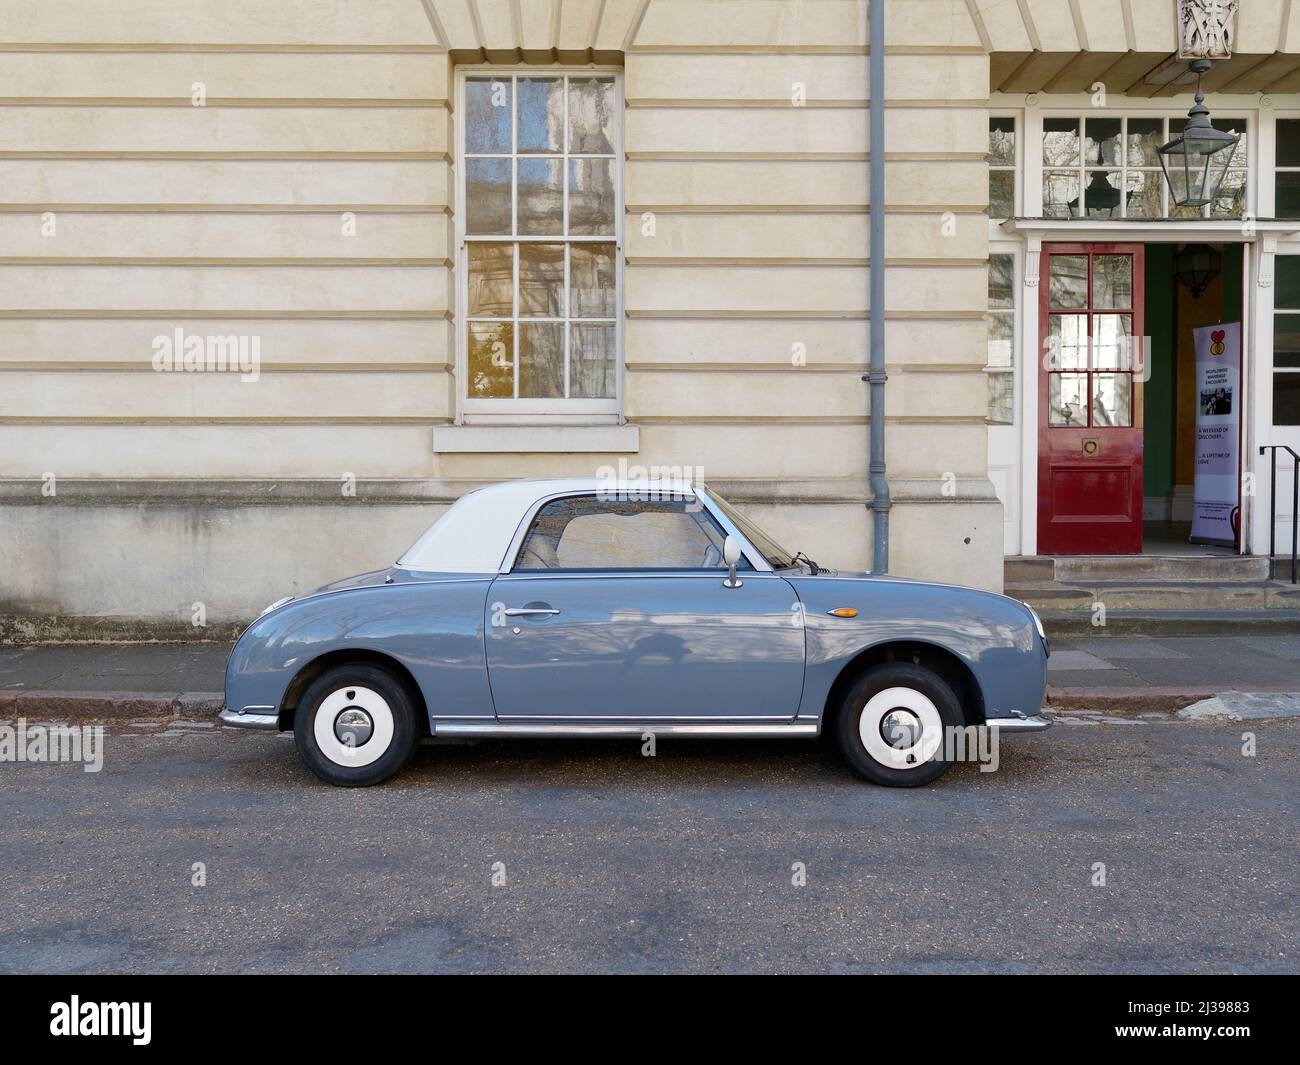 London, Greater London, England, April 02 2022: Sehr süßer Nissan Figaro Cabriolet in Blau mit weißem Dach. Stockfoto